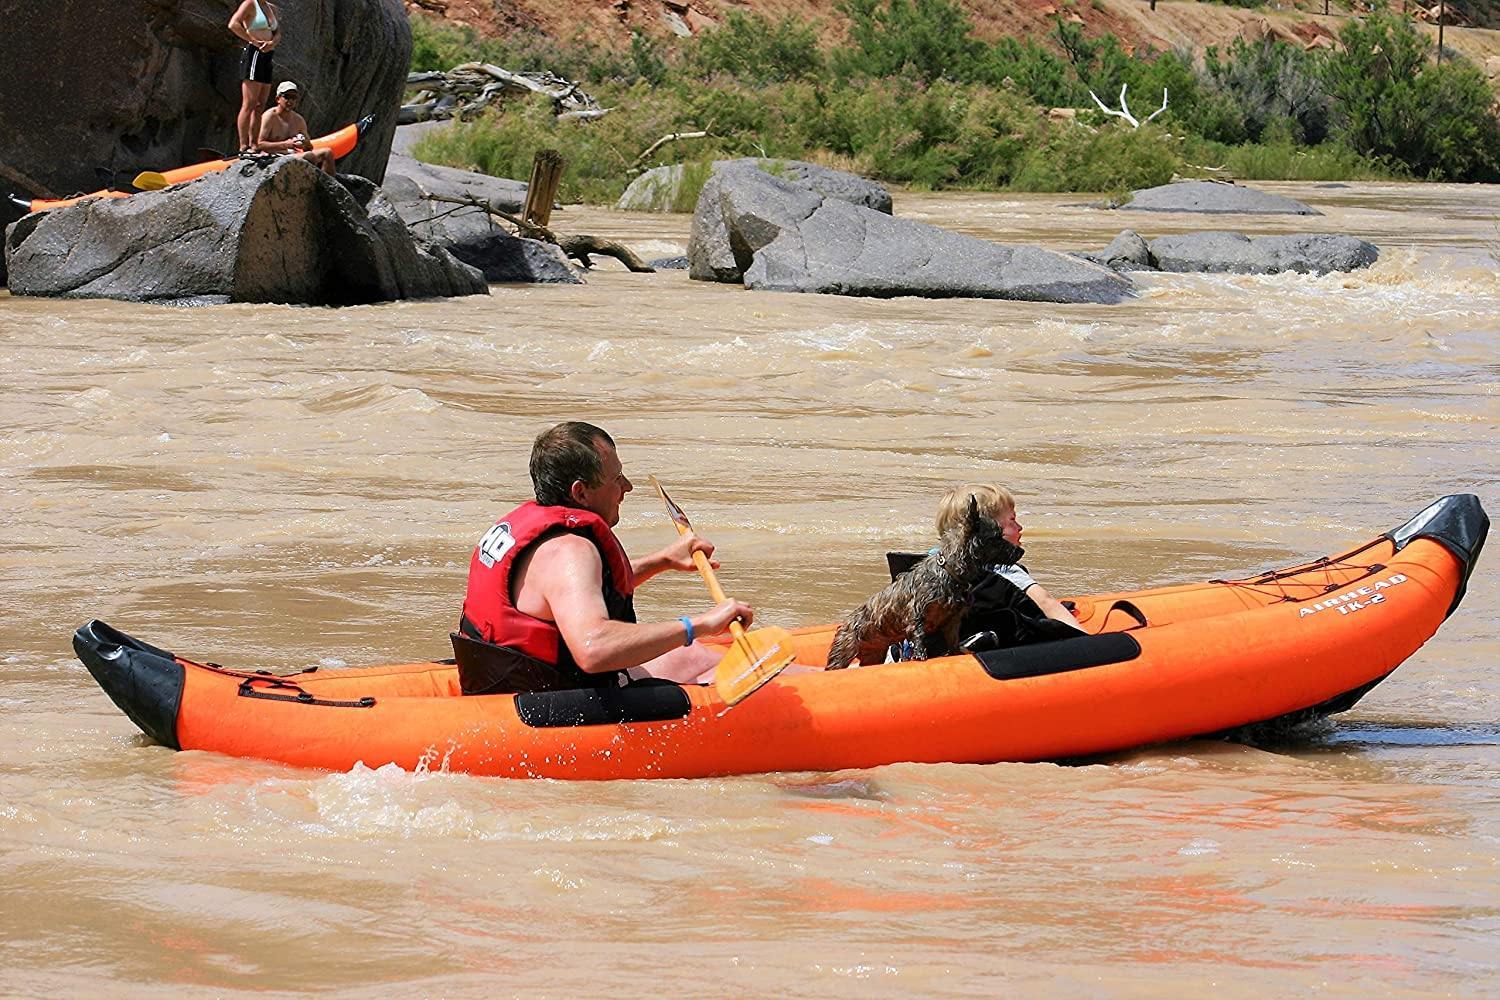 Airhead Inflatable Kayak AIRHEAD - Montana Inflatable Kayak 2 Person